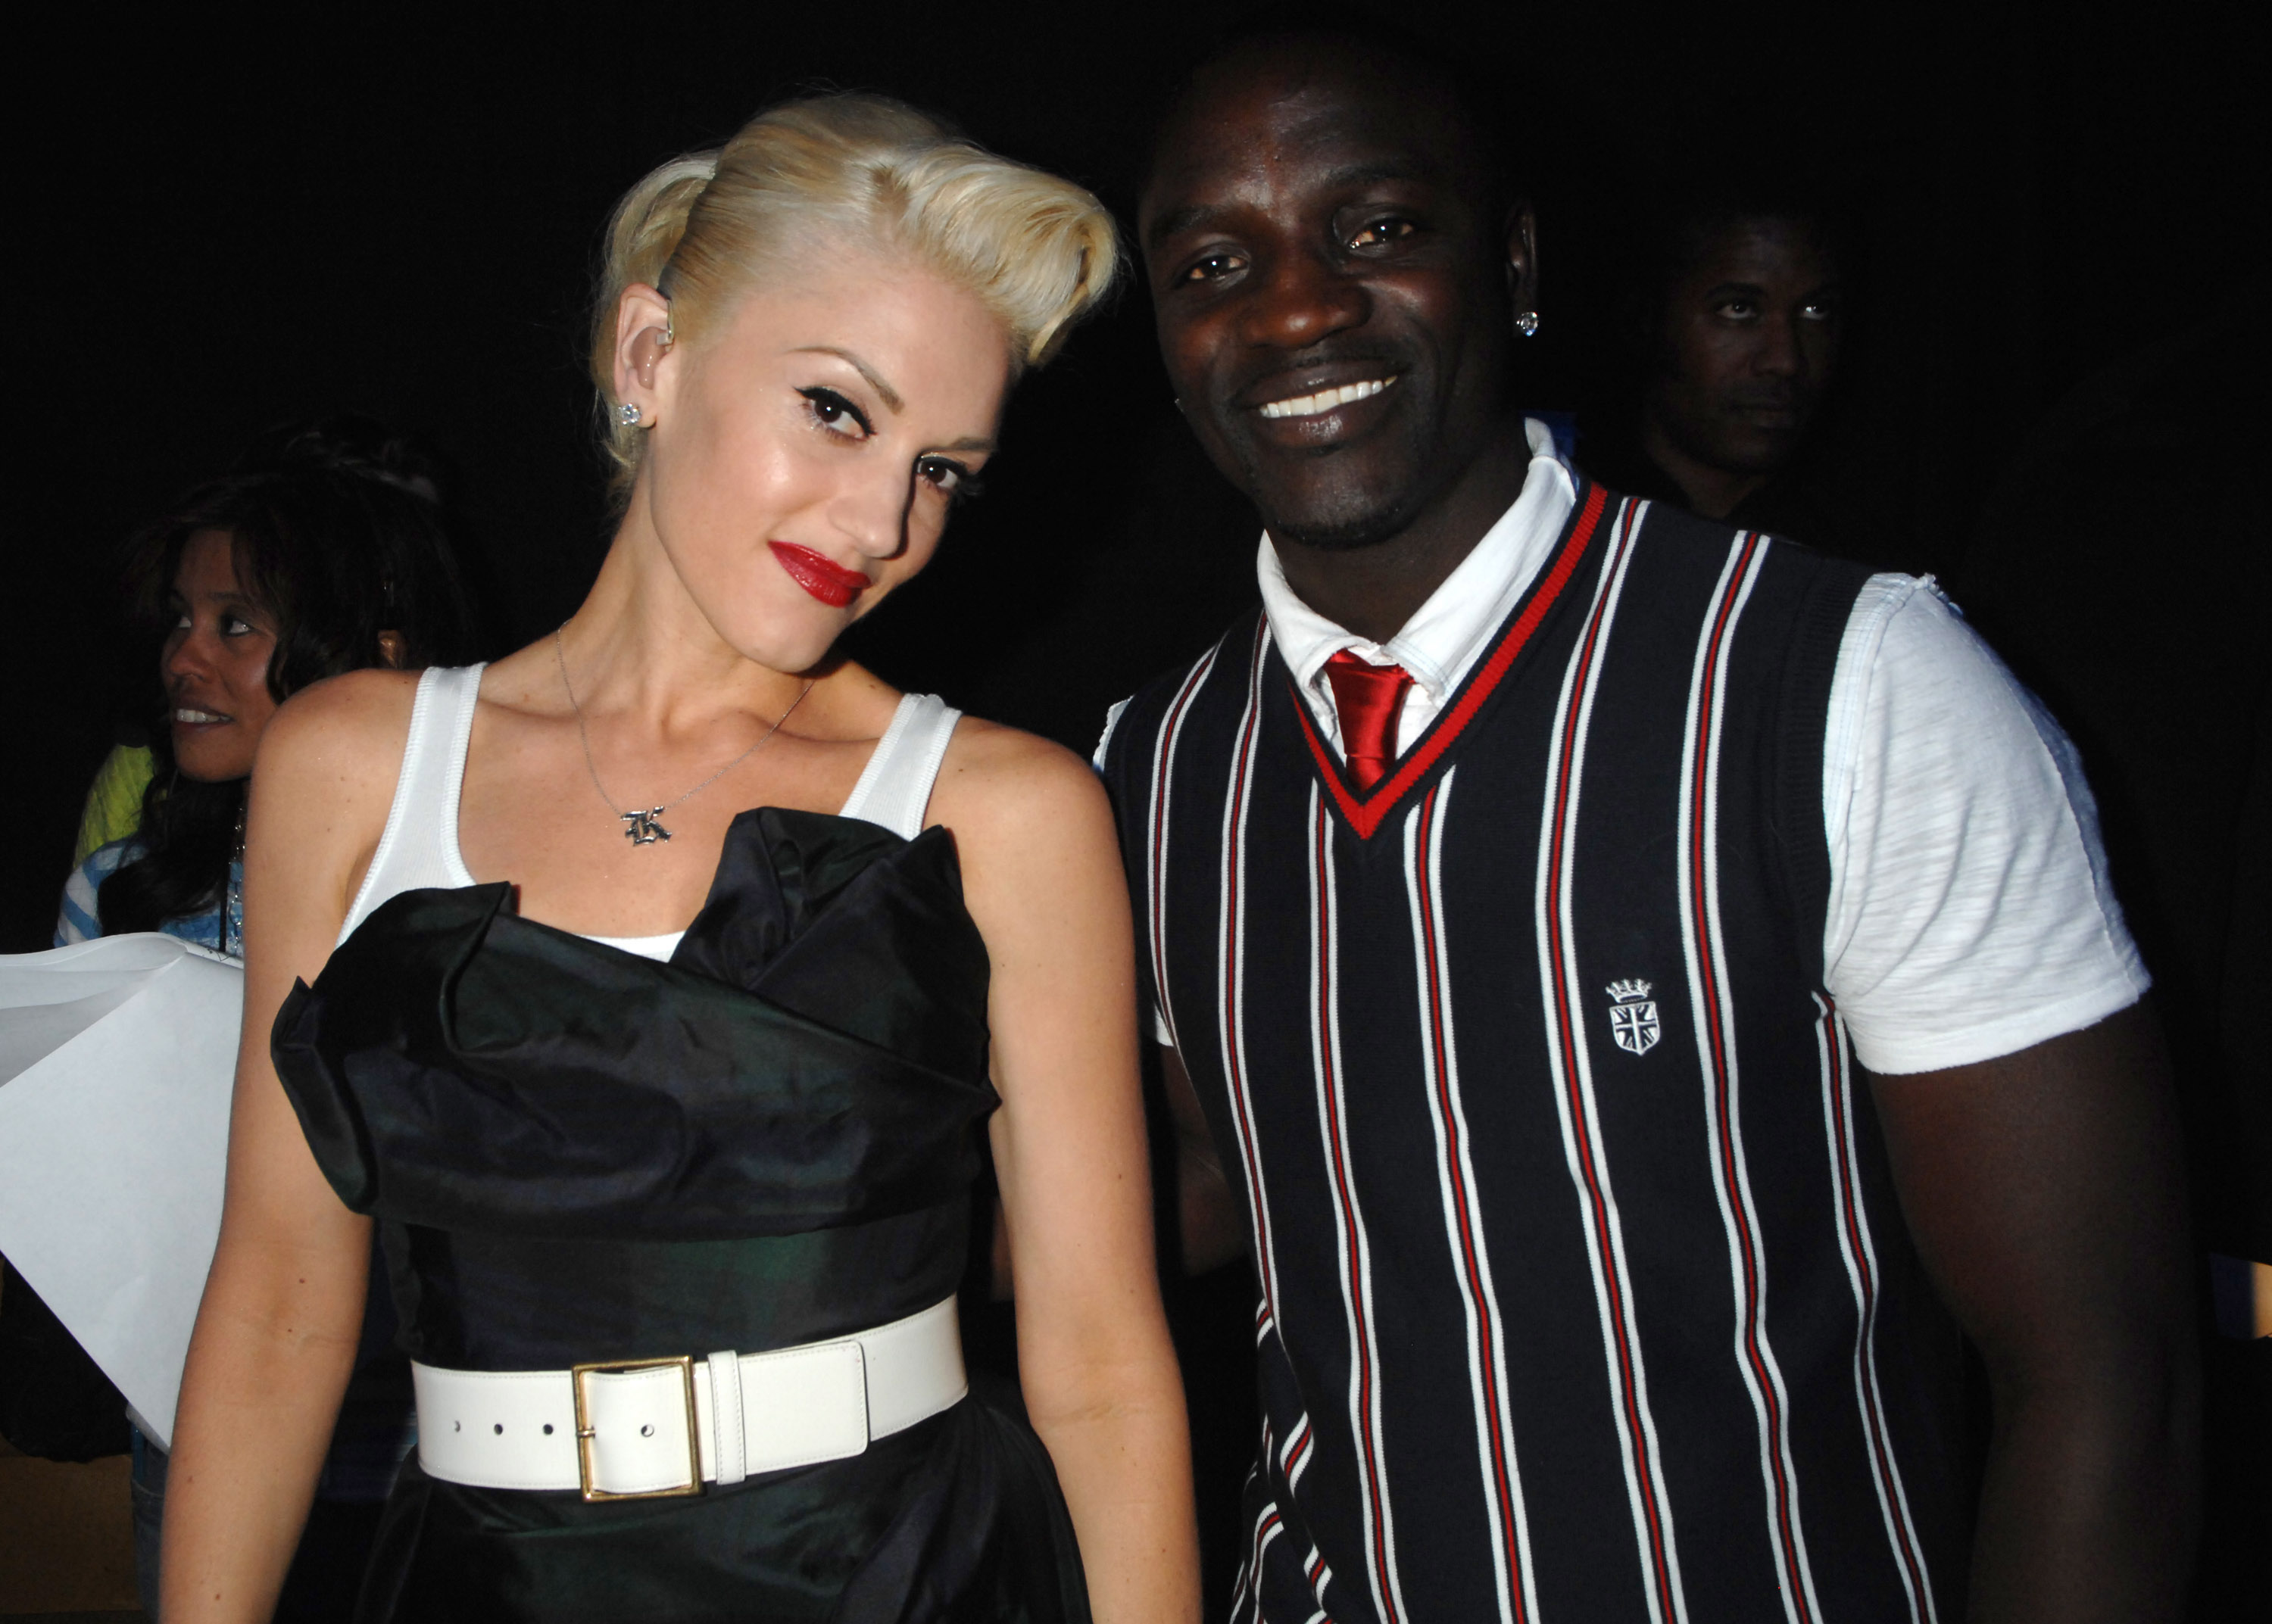 Gwen Stefani and Akon wearing black outfits